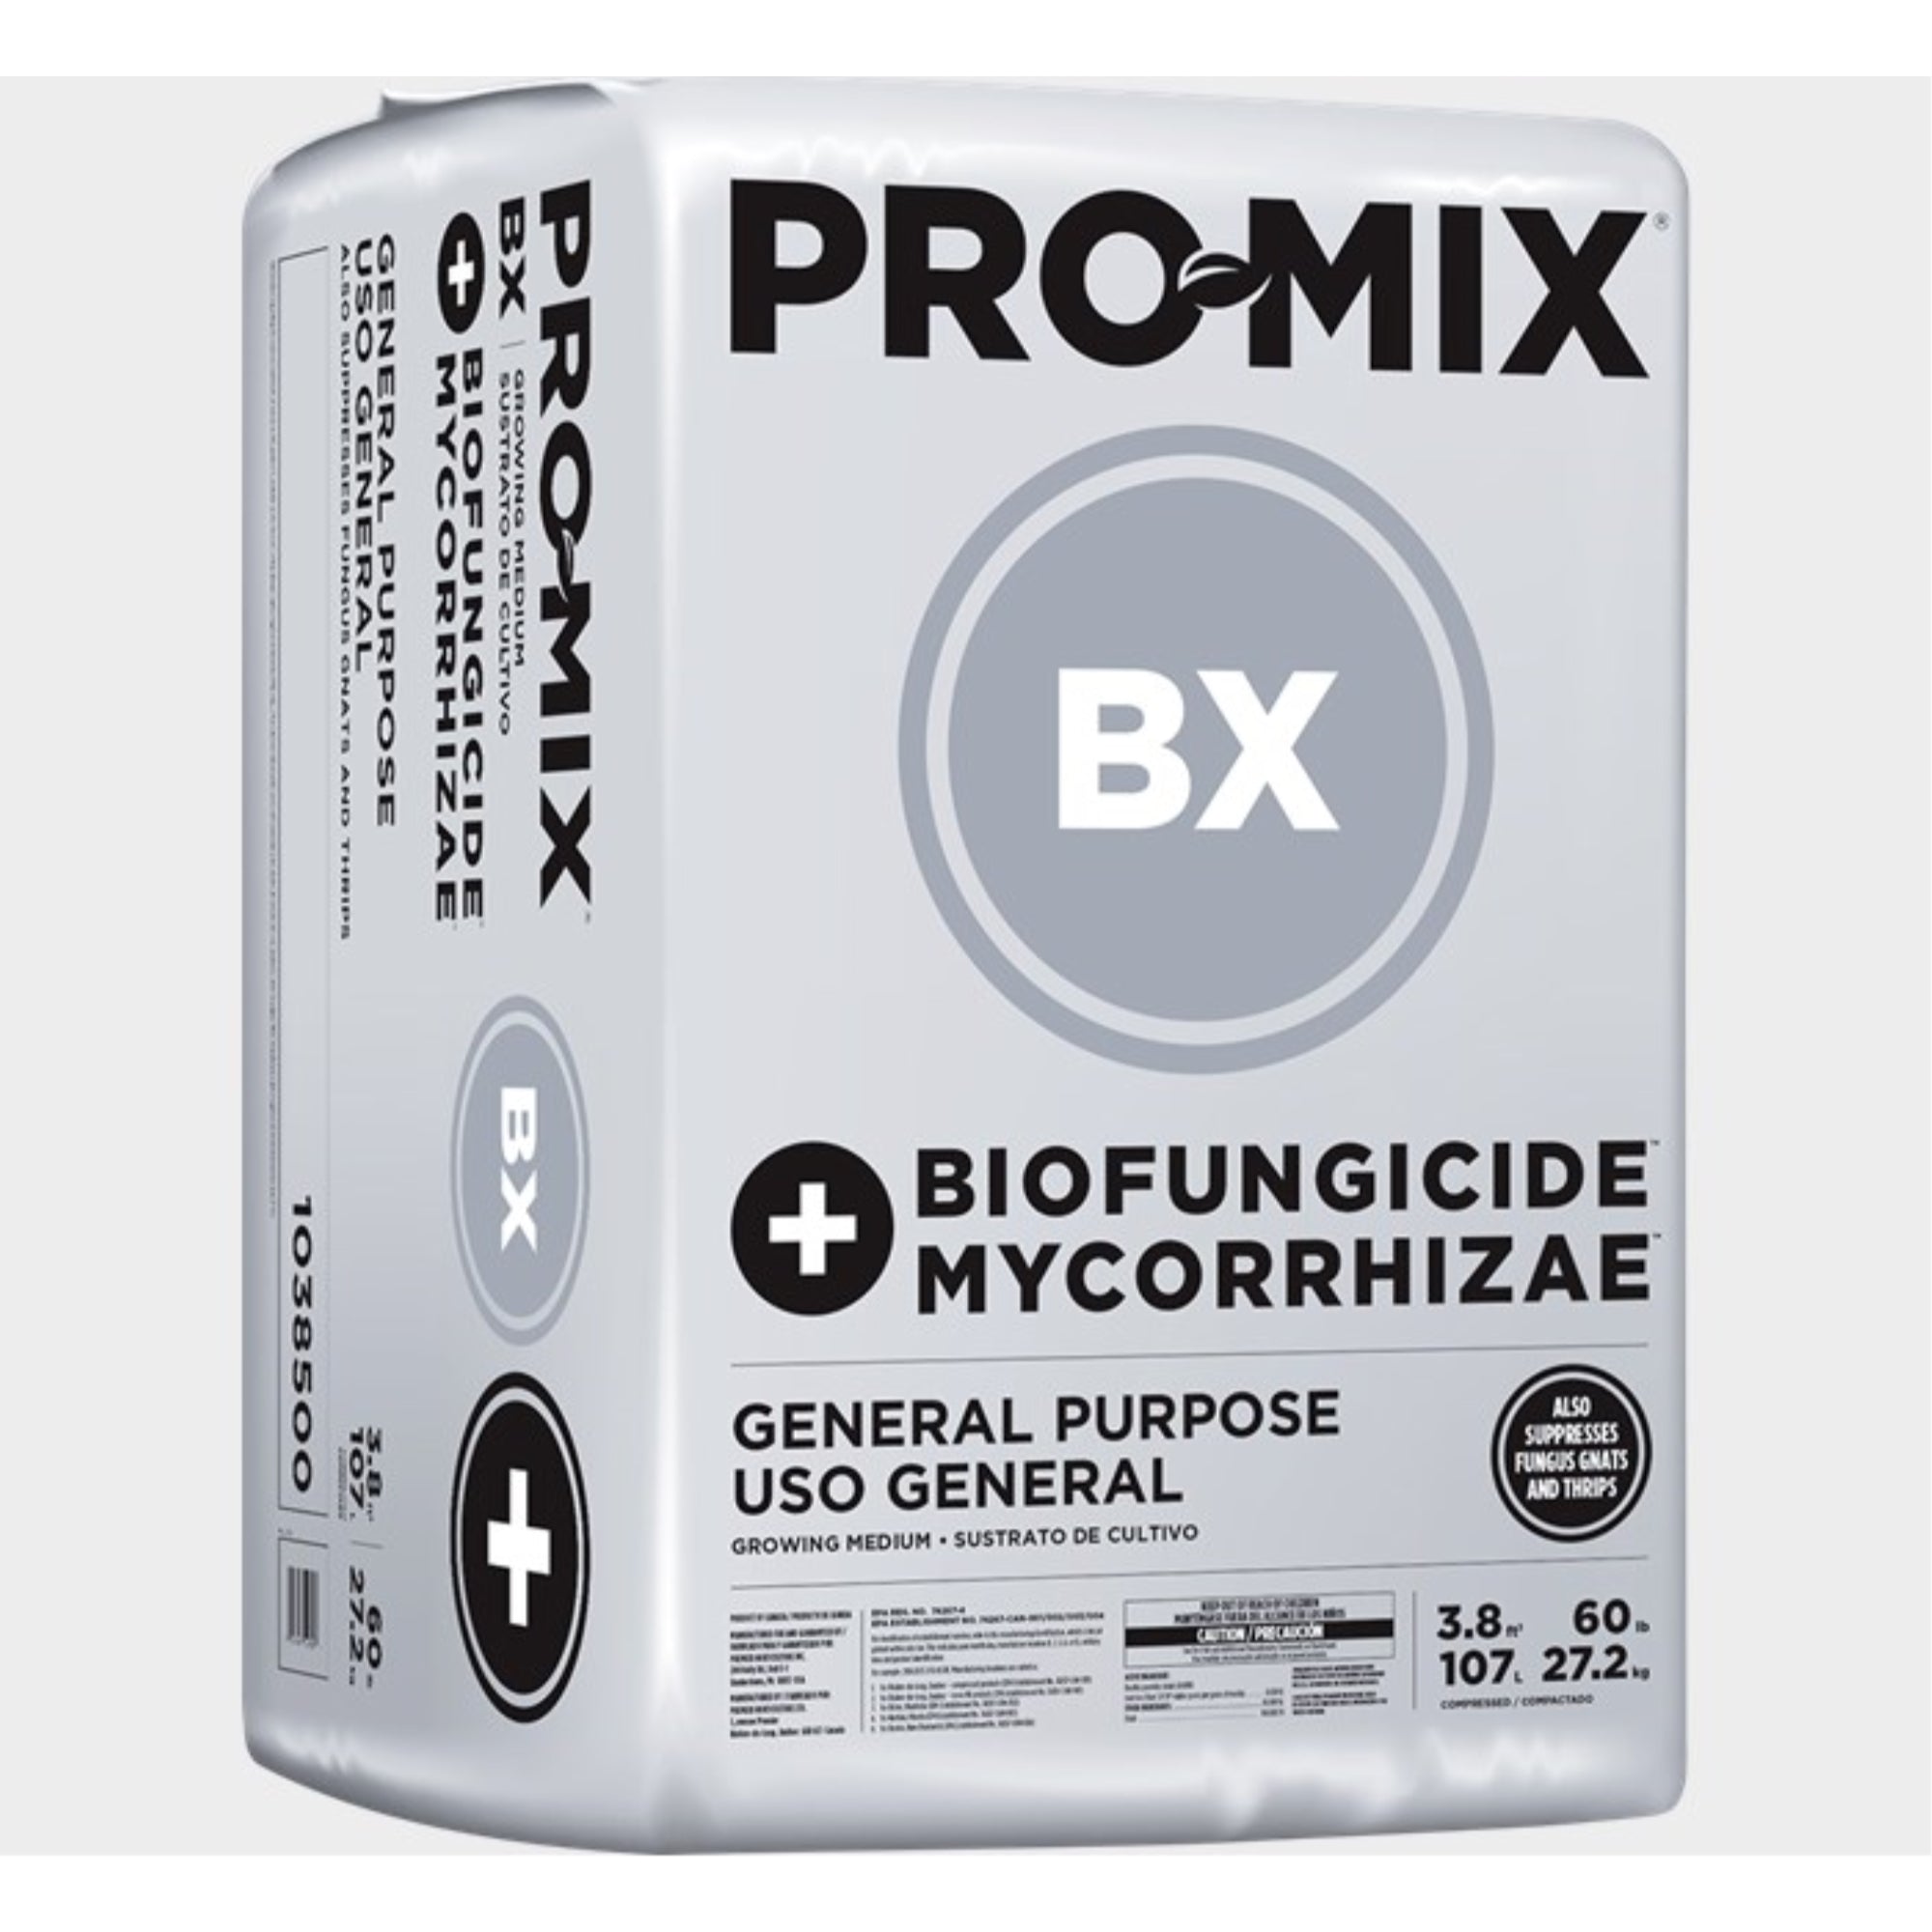 Premier PRO-MIX BX Biofungicide + Mycorrhizae, Gerneral Purpose, 3.8 CF